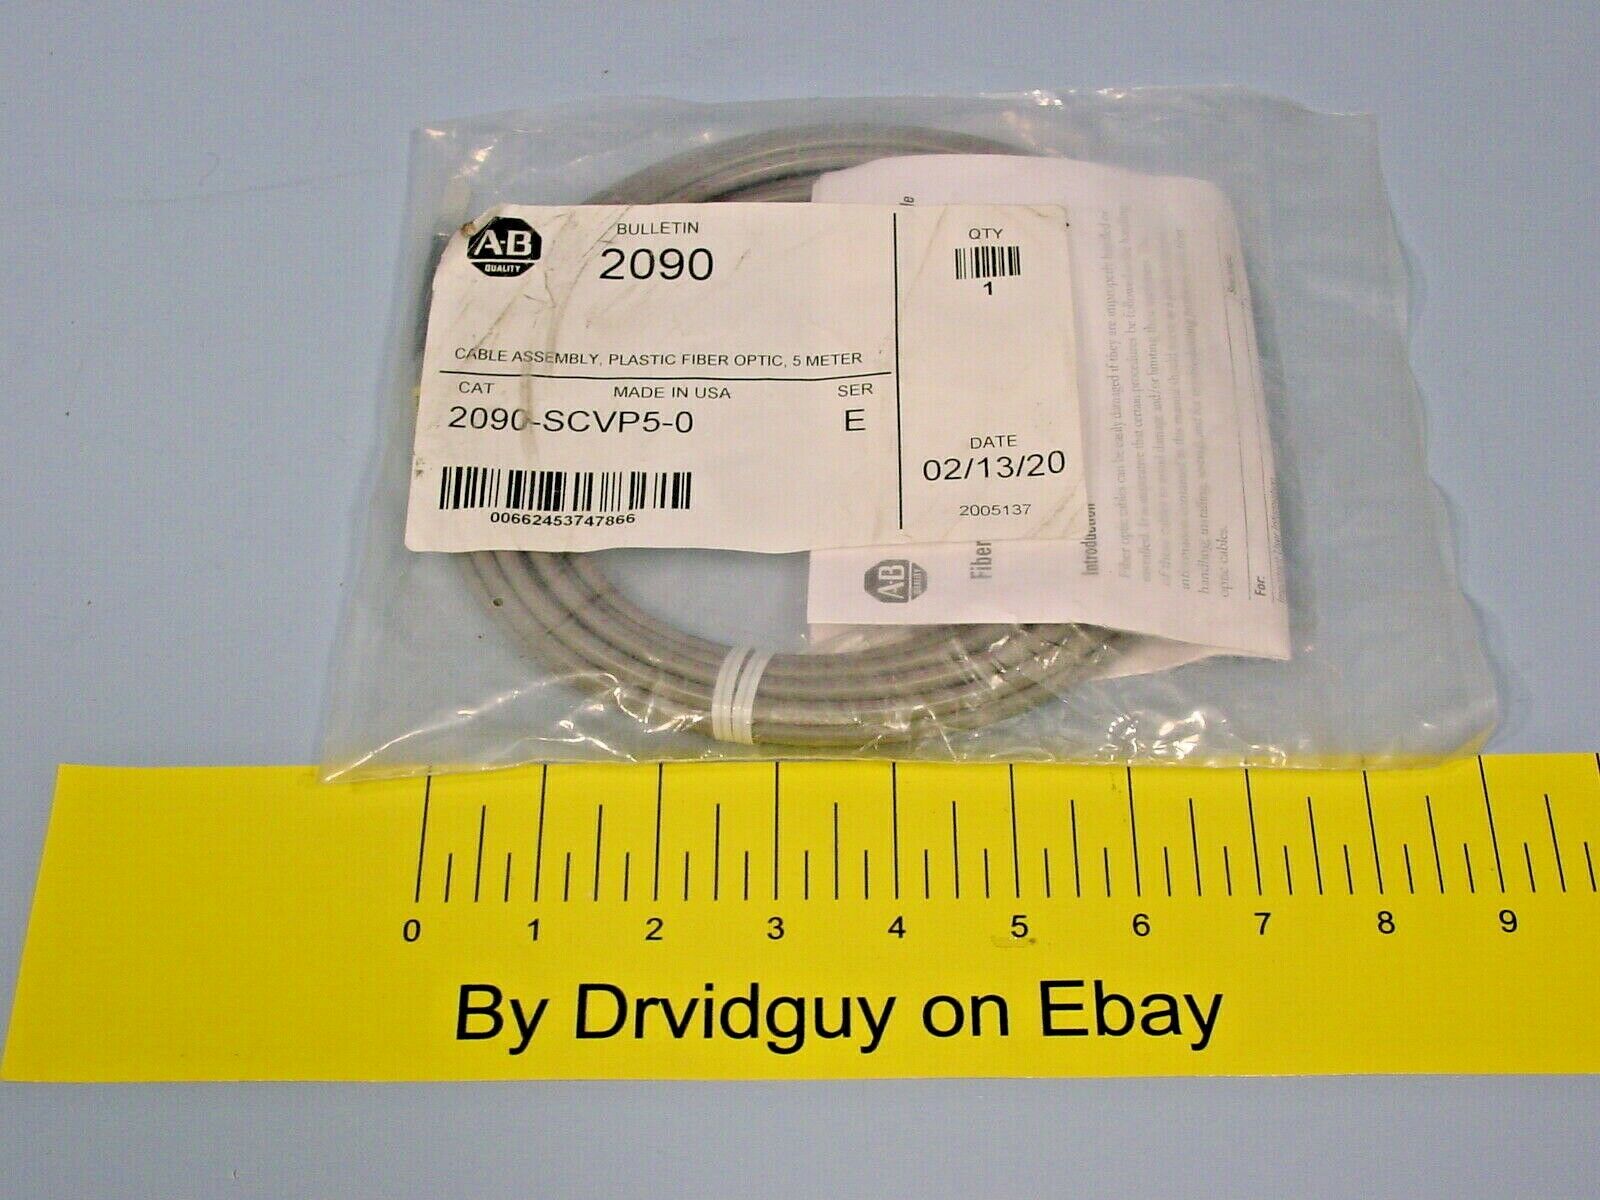 Allen-bradley 2090-scvp5-0 Plastic Fiber Optic Cable Assembly; 5 Meter; Series A